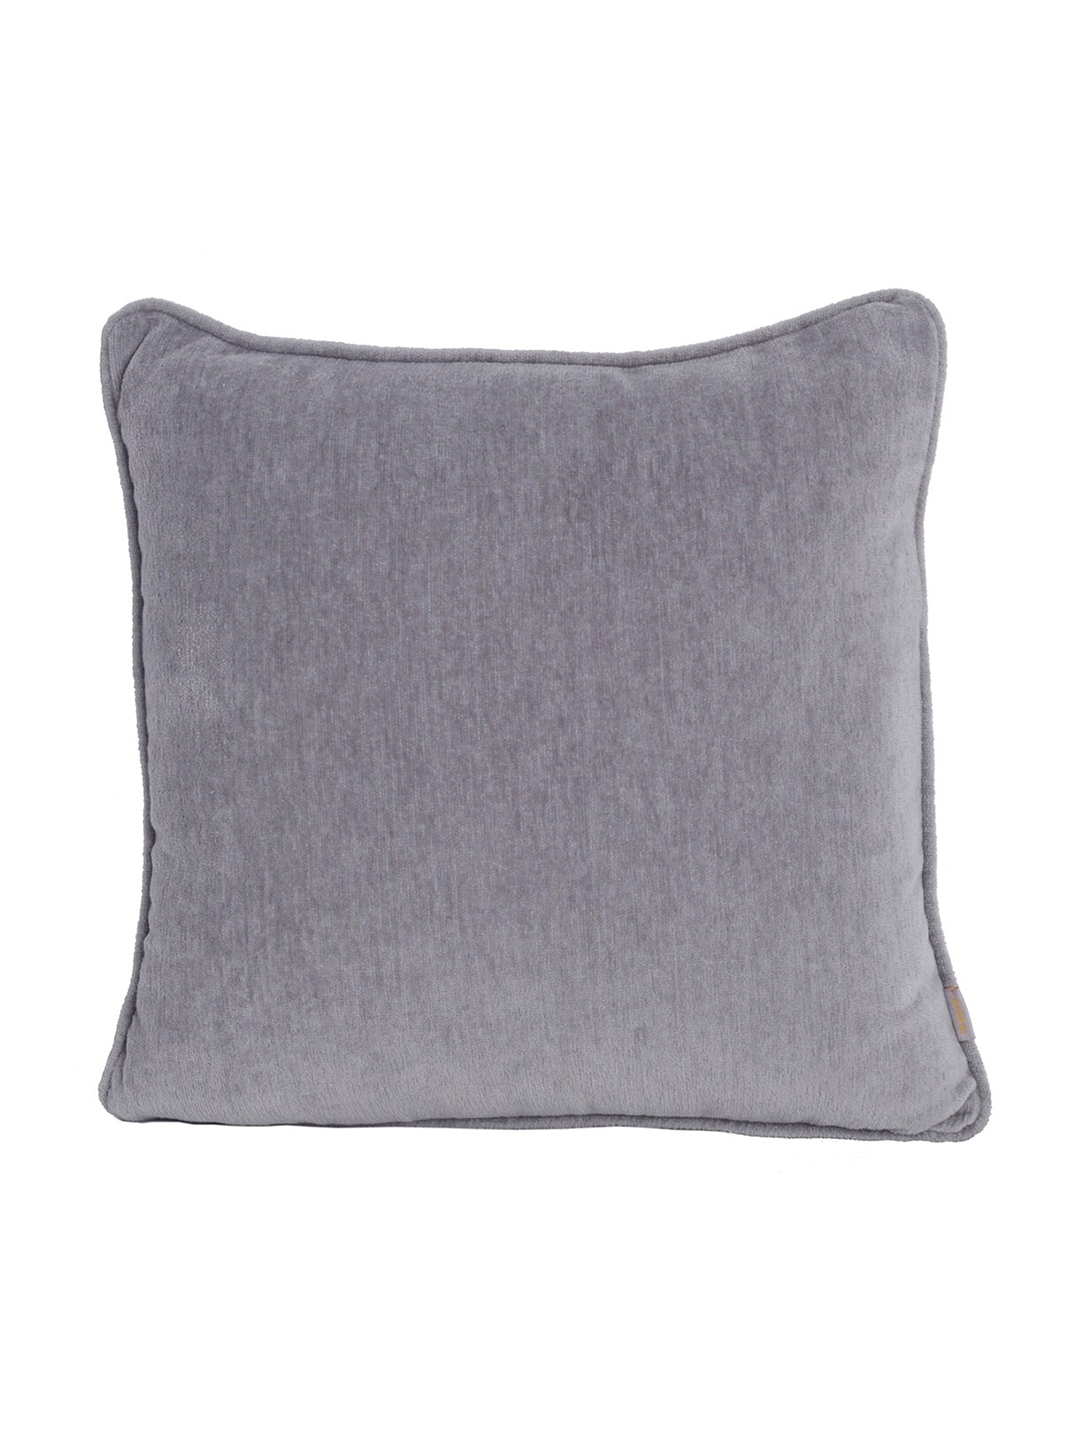 MASPAR Grey Square Pure Cotton Cushion Covers